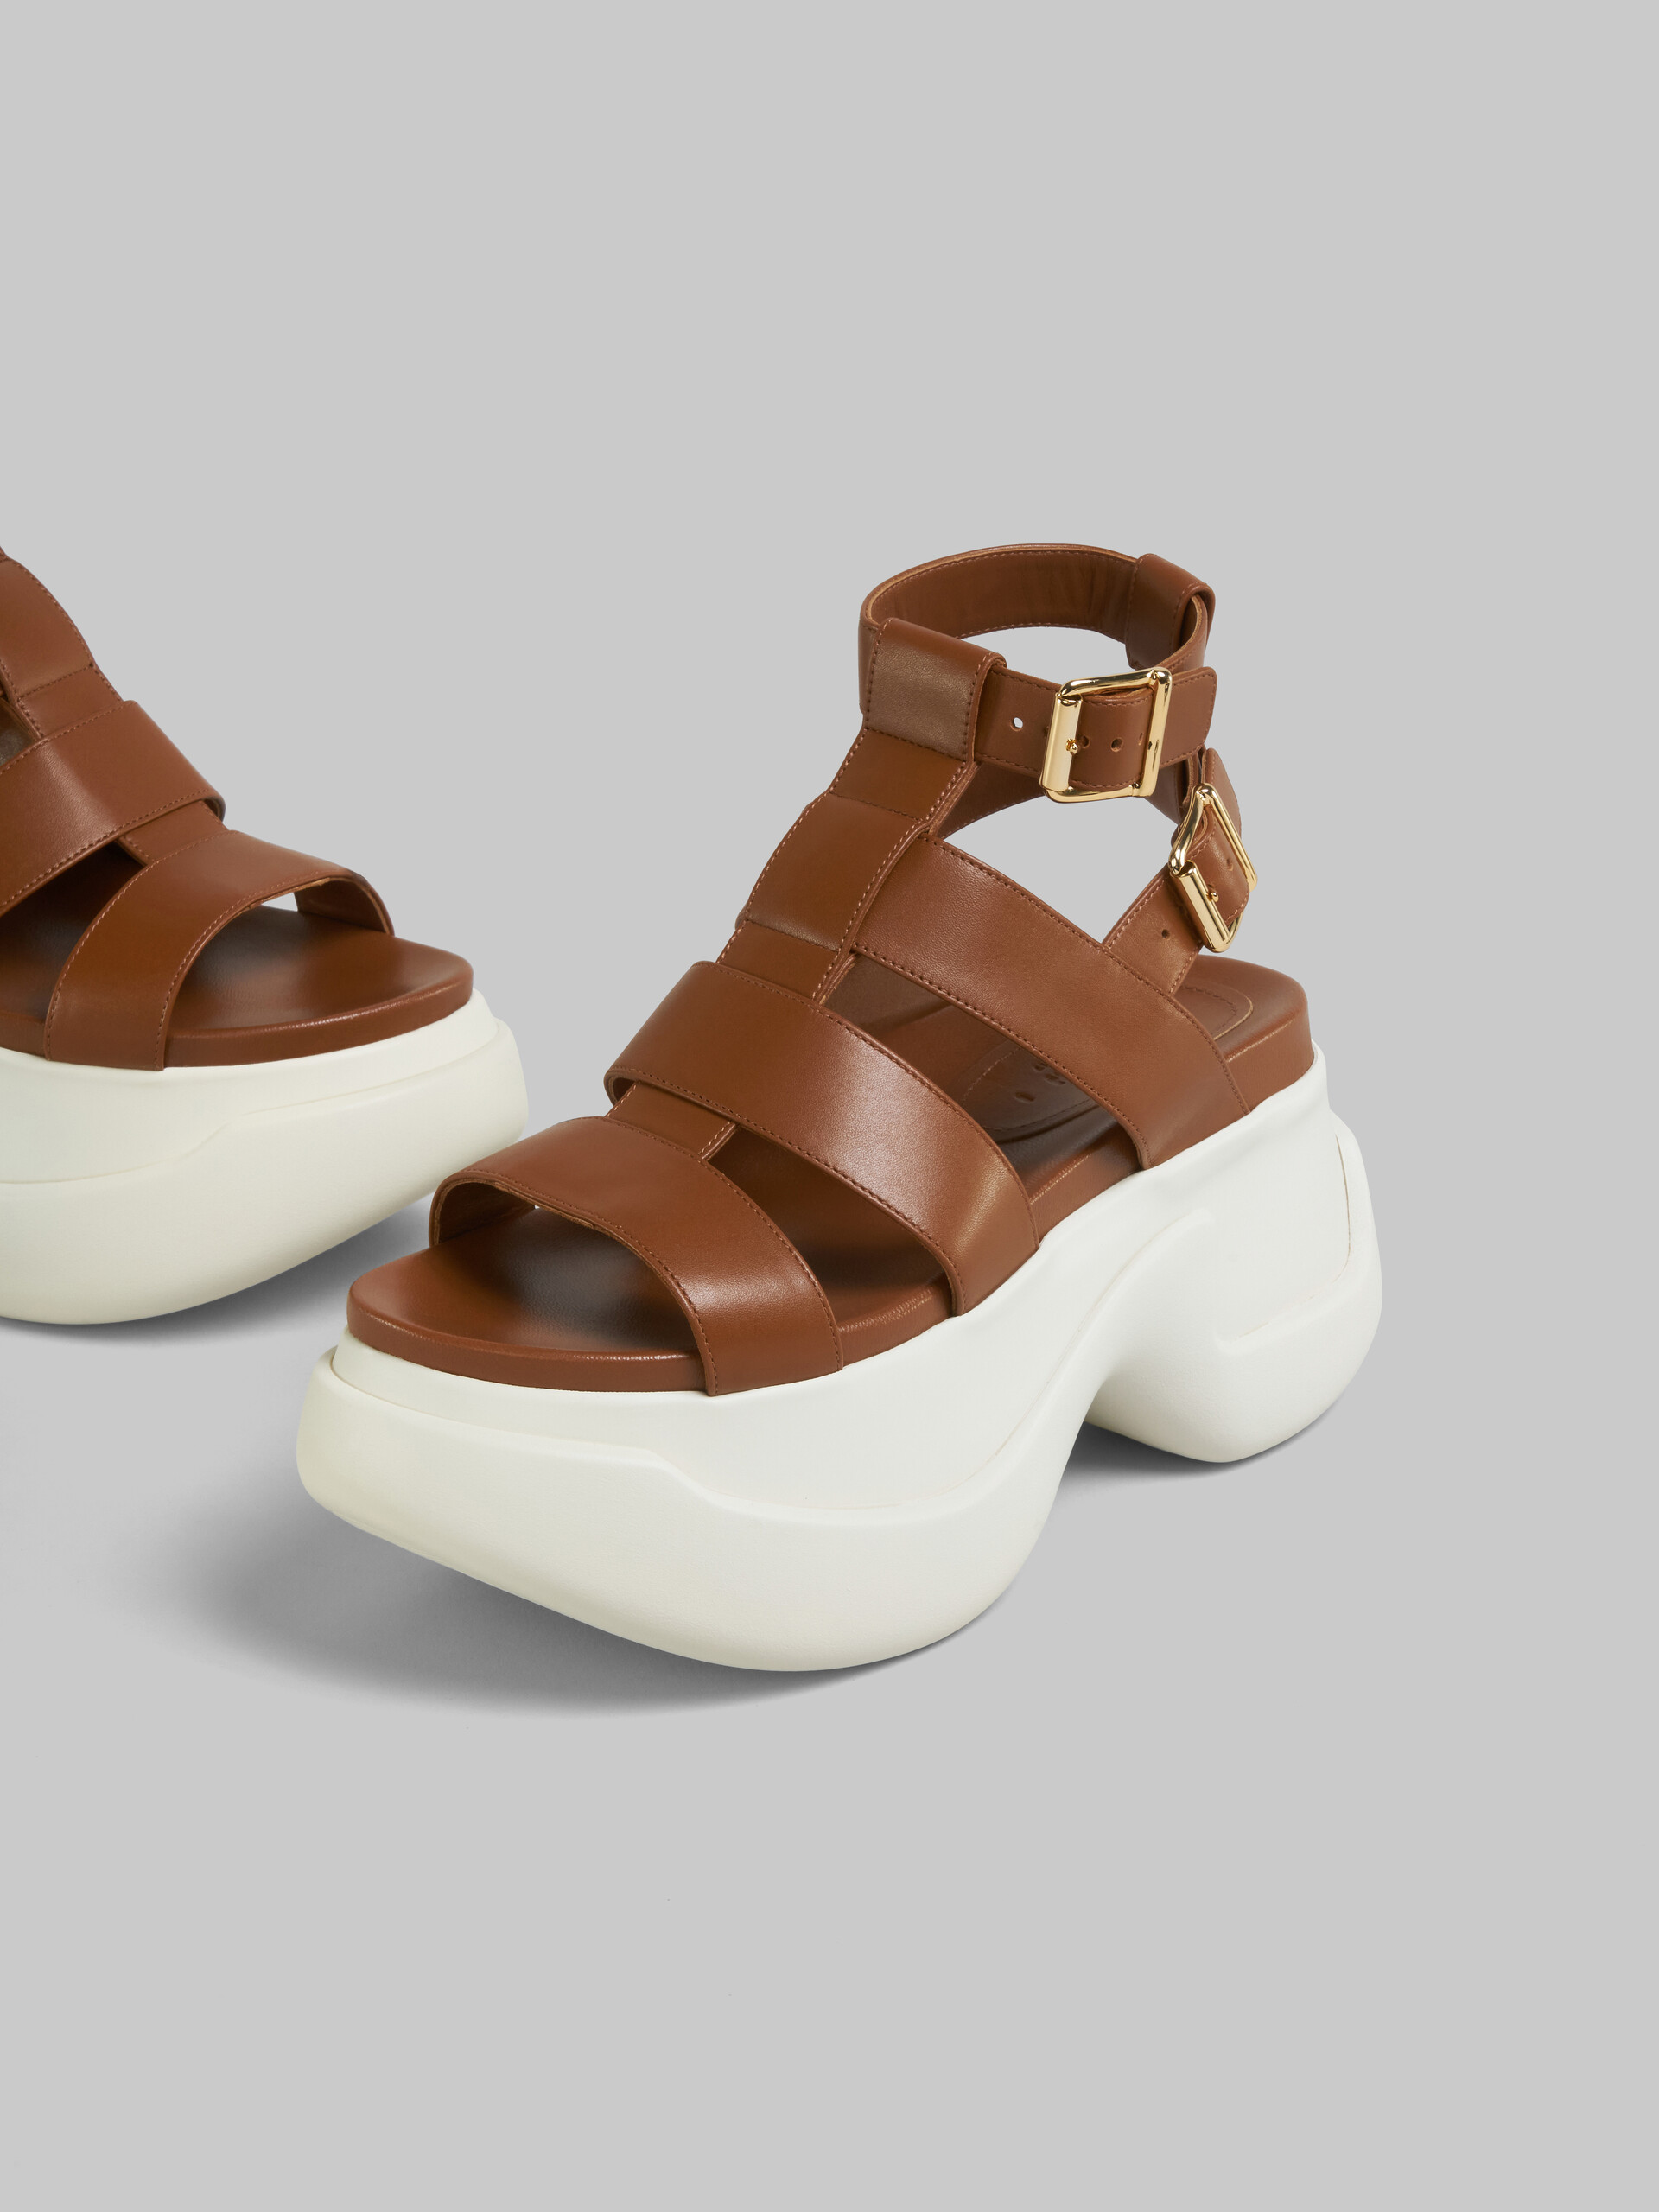 Brown leather gladiator sandal with platform sole - Sandals - Image 5